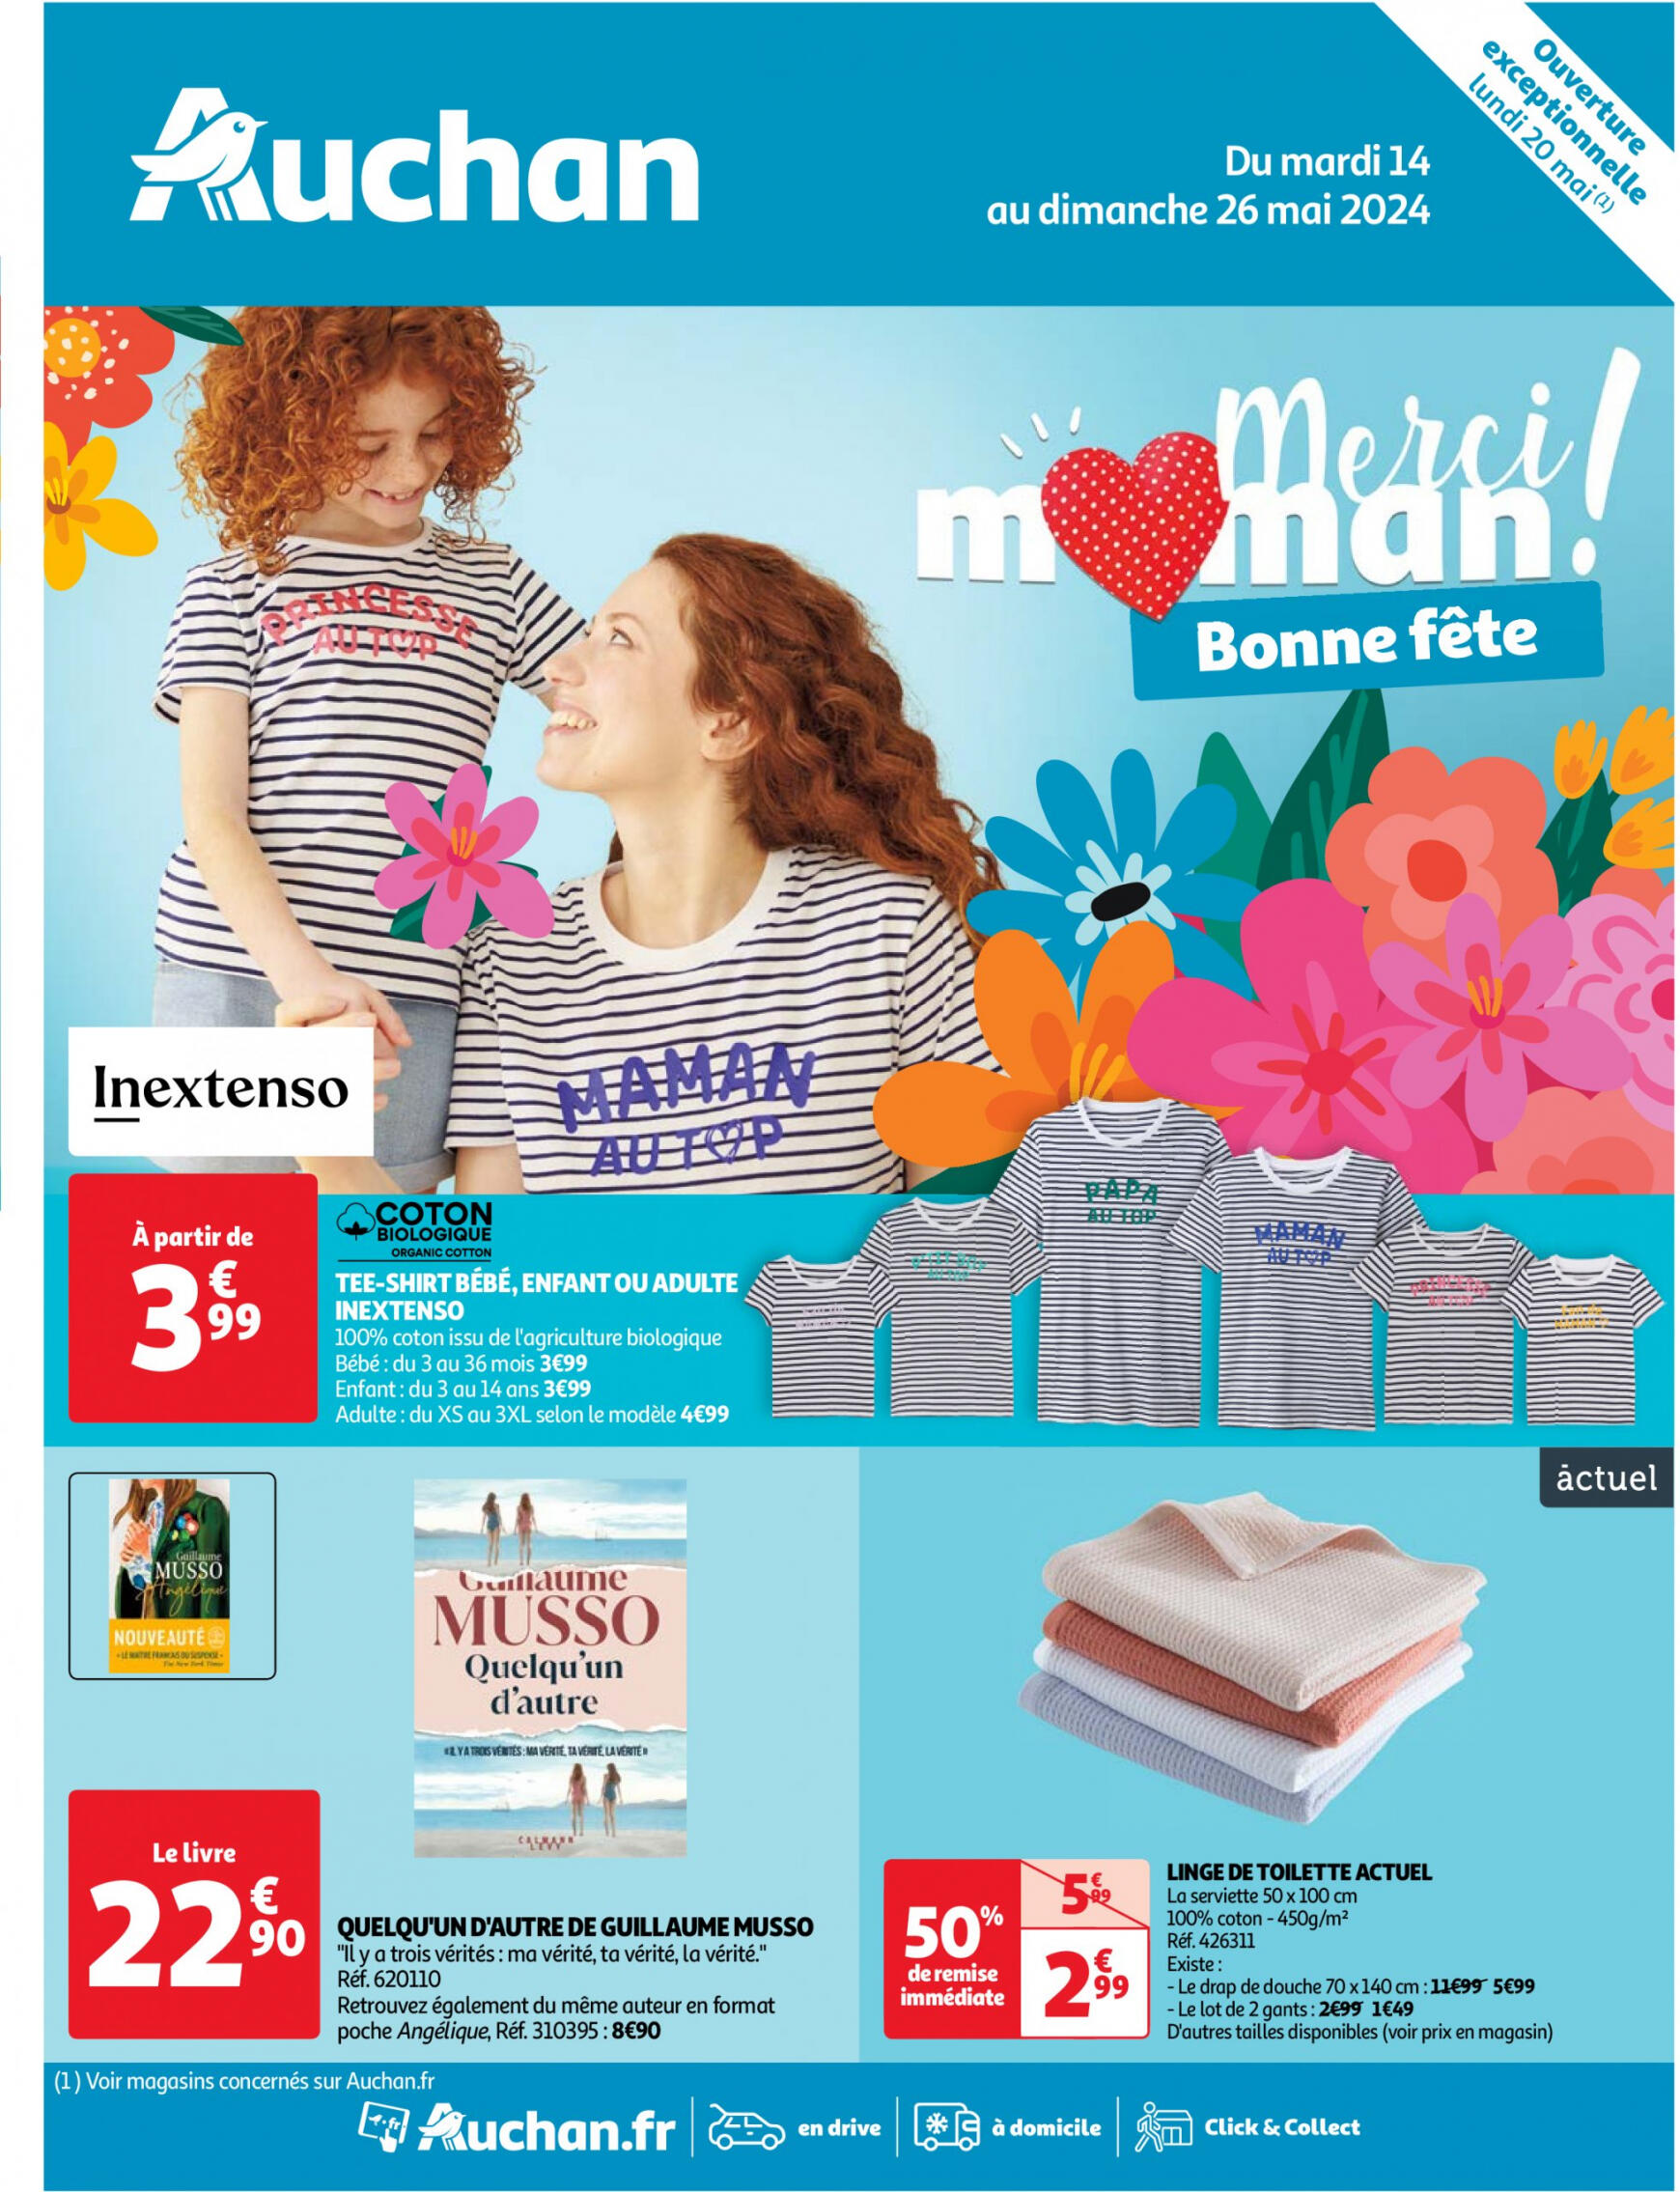 auchan - Prospectus Auchan - Merci maman actuel 14.05. - 26.05. - page: 1